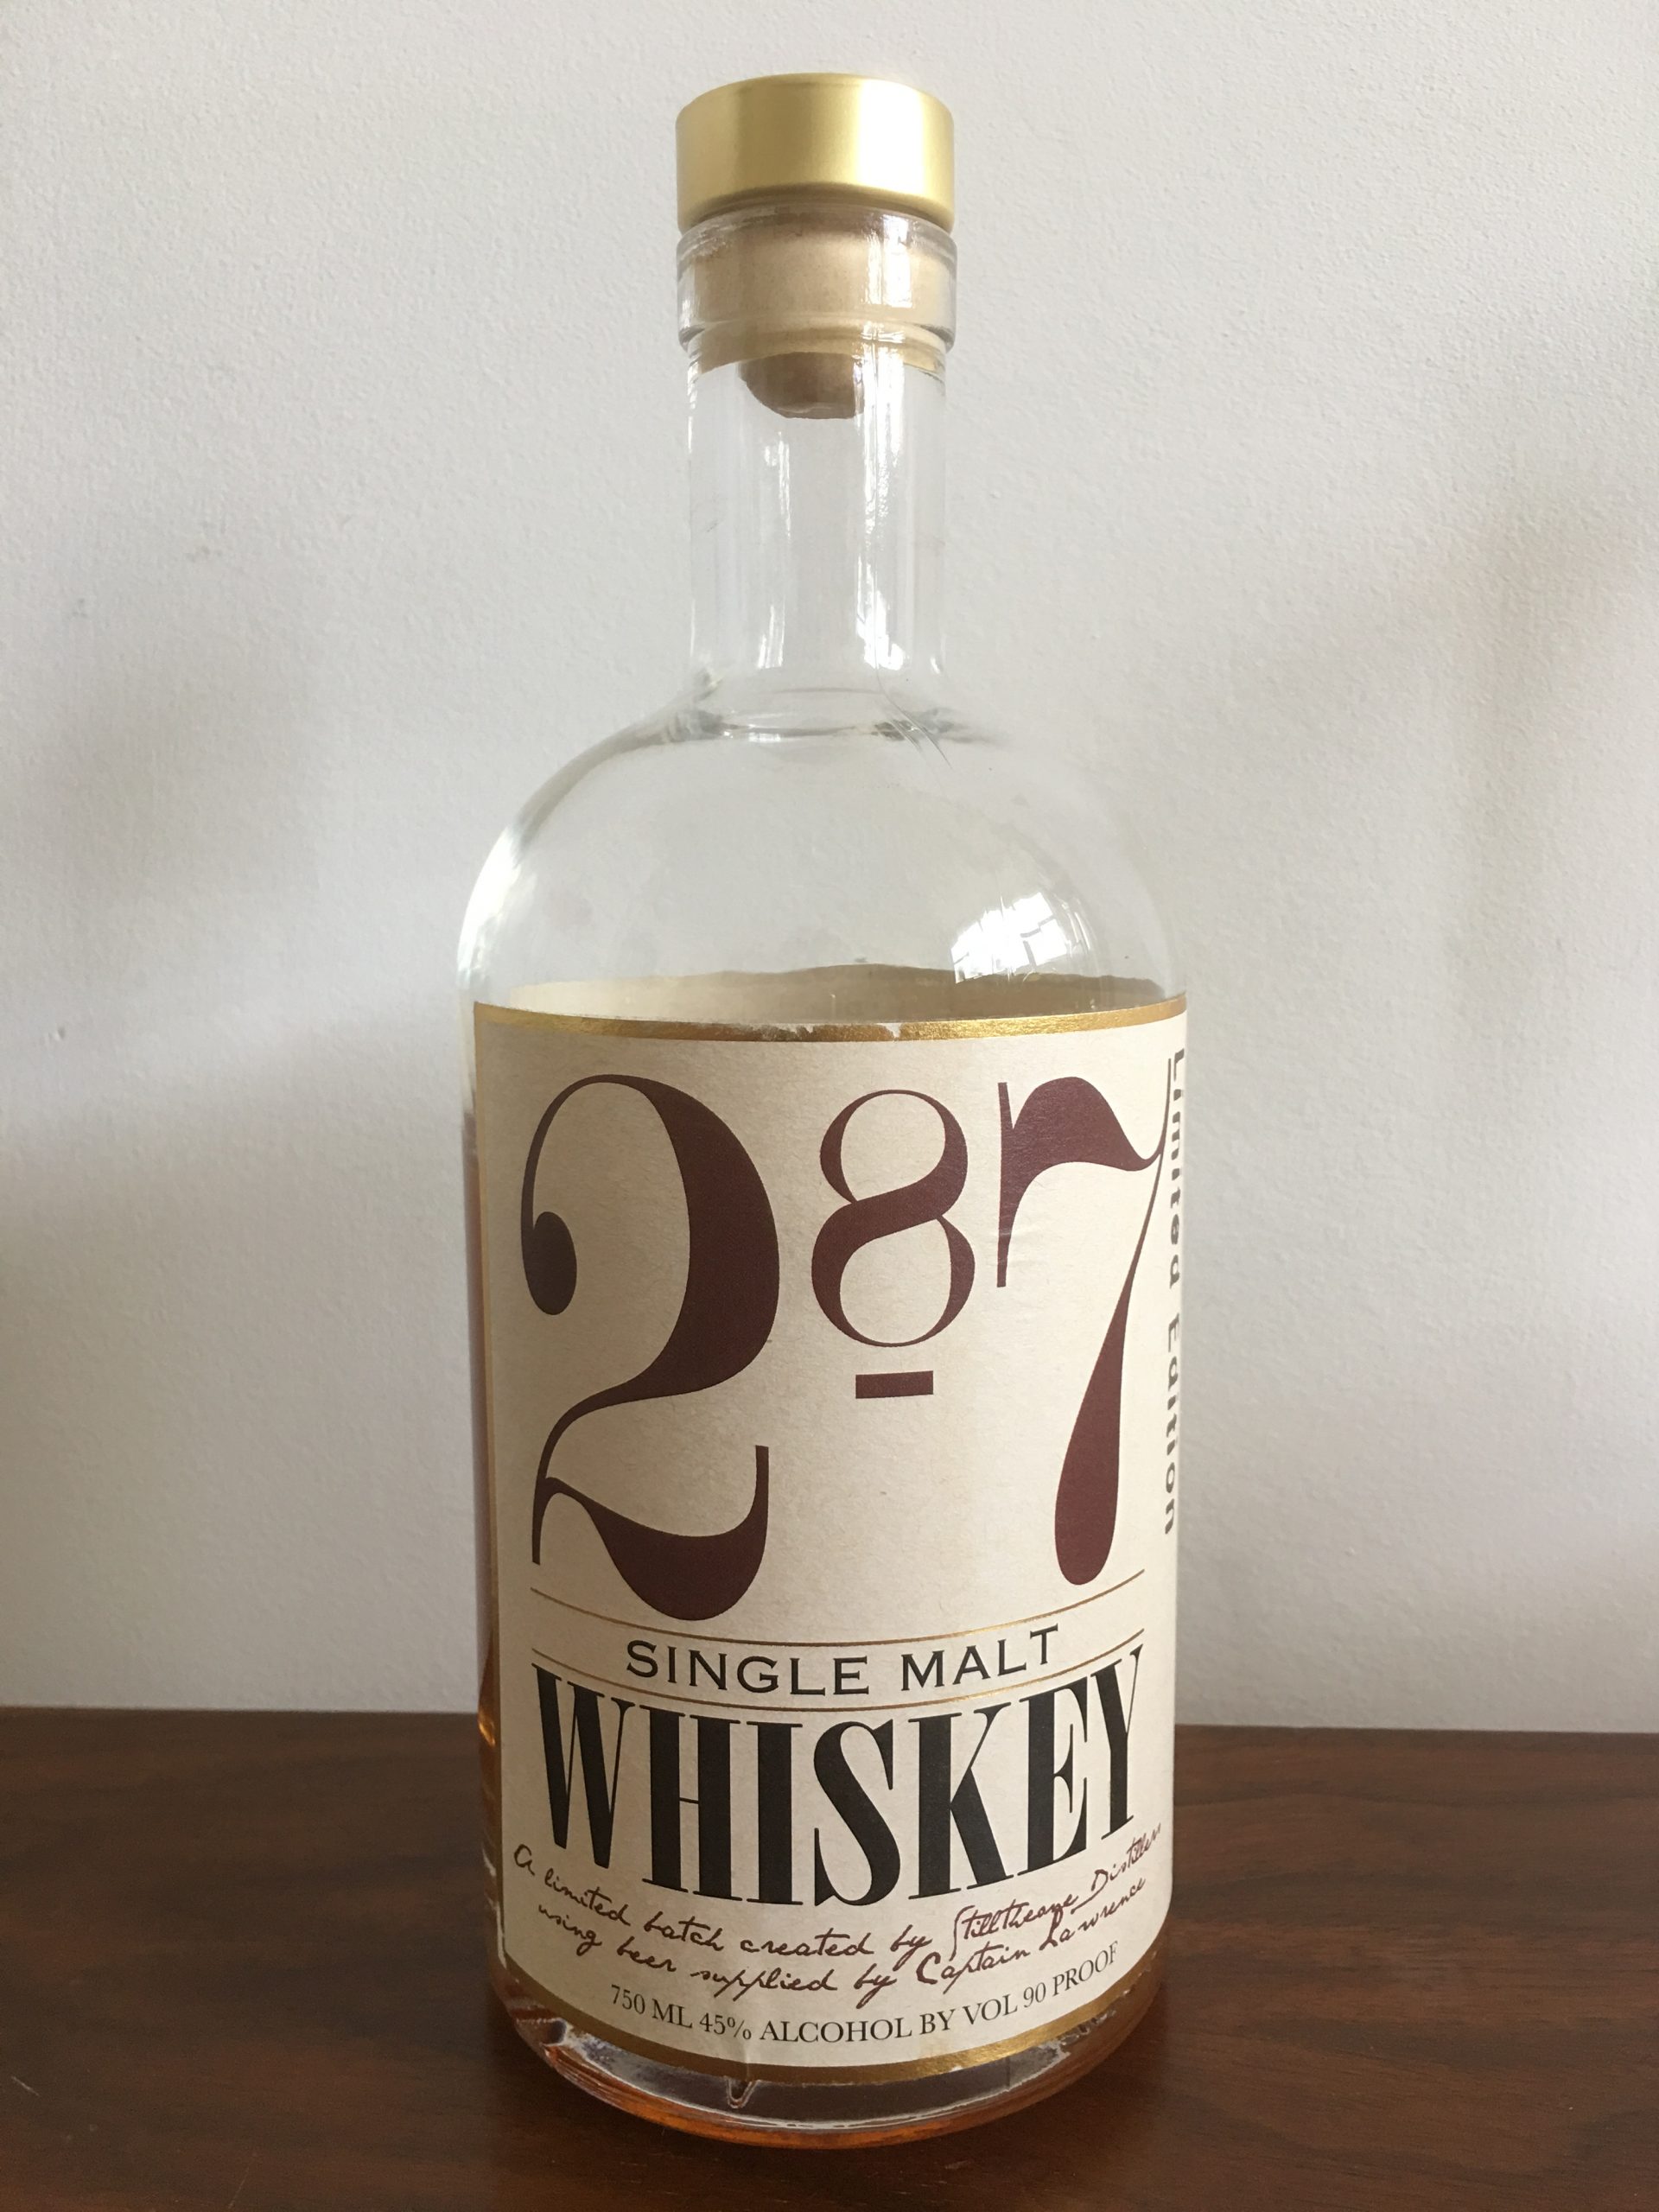 287 Single Malt Whiskey